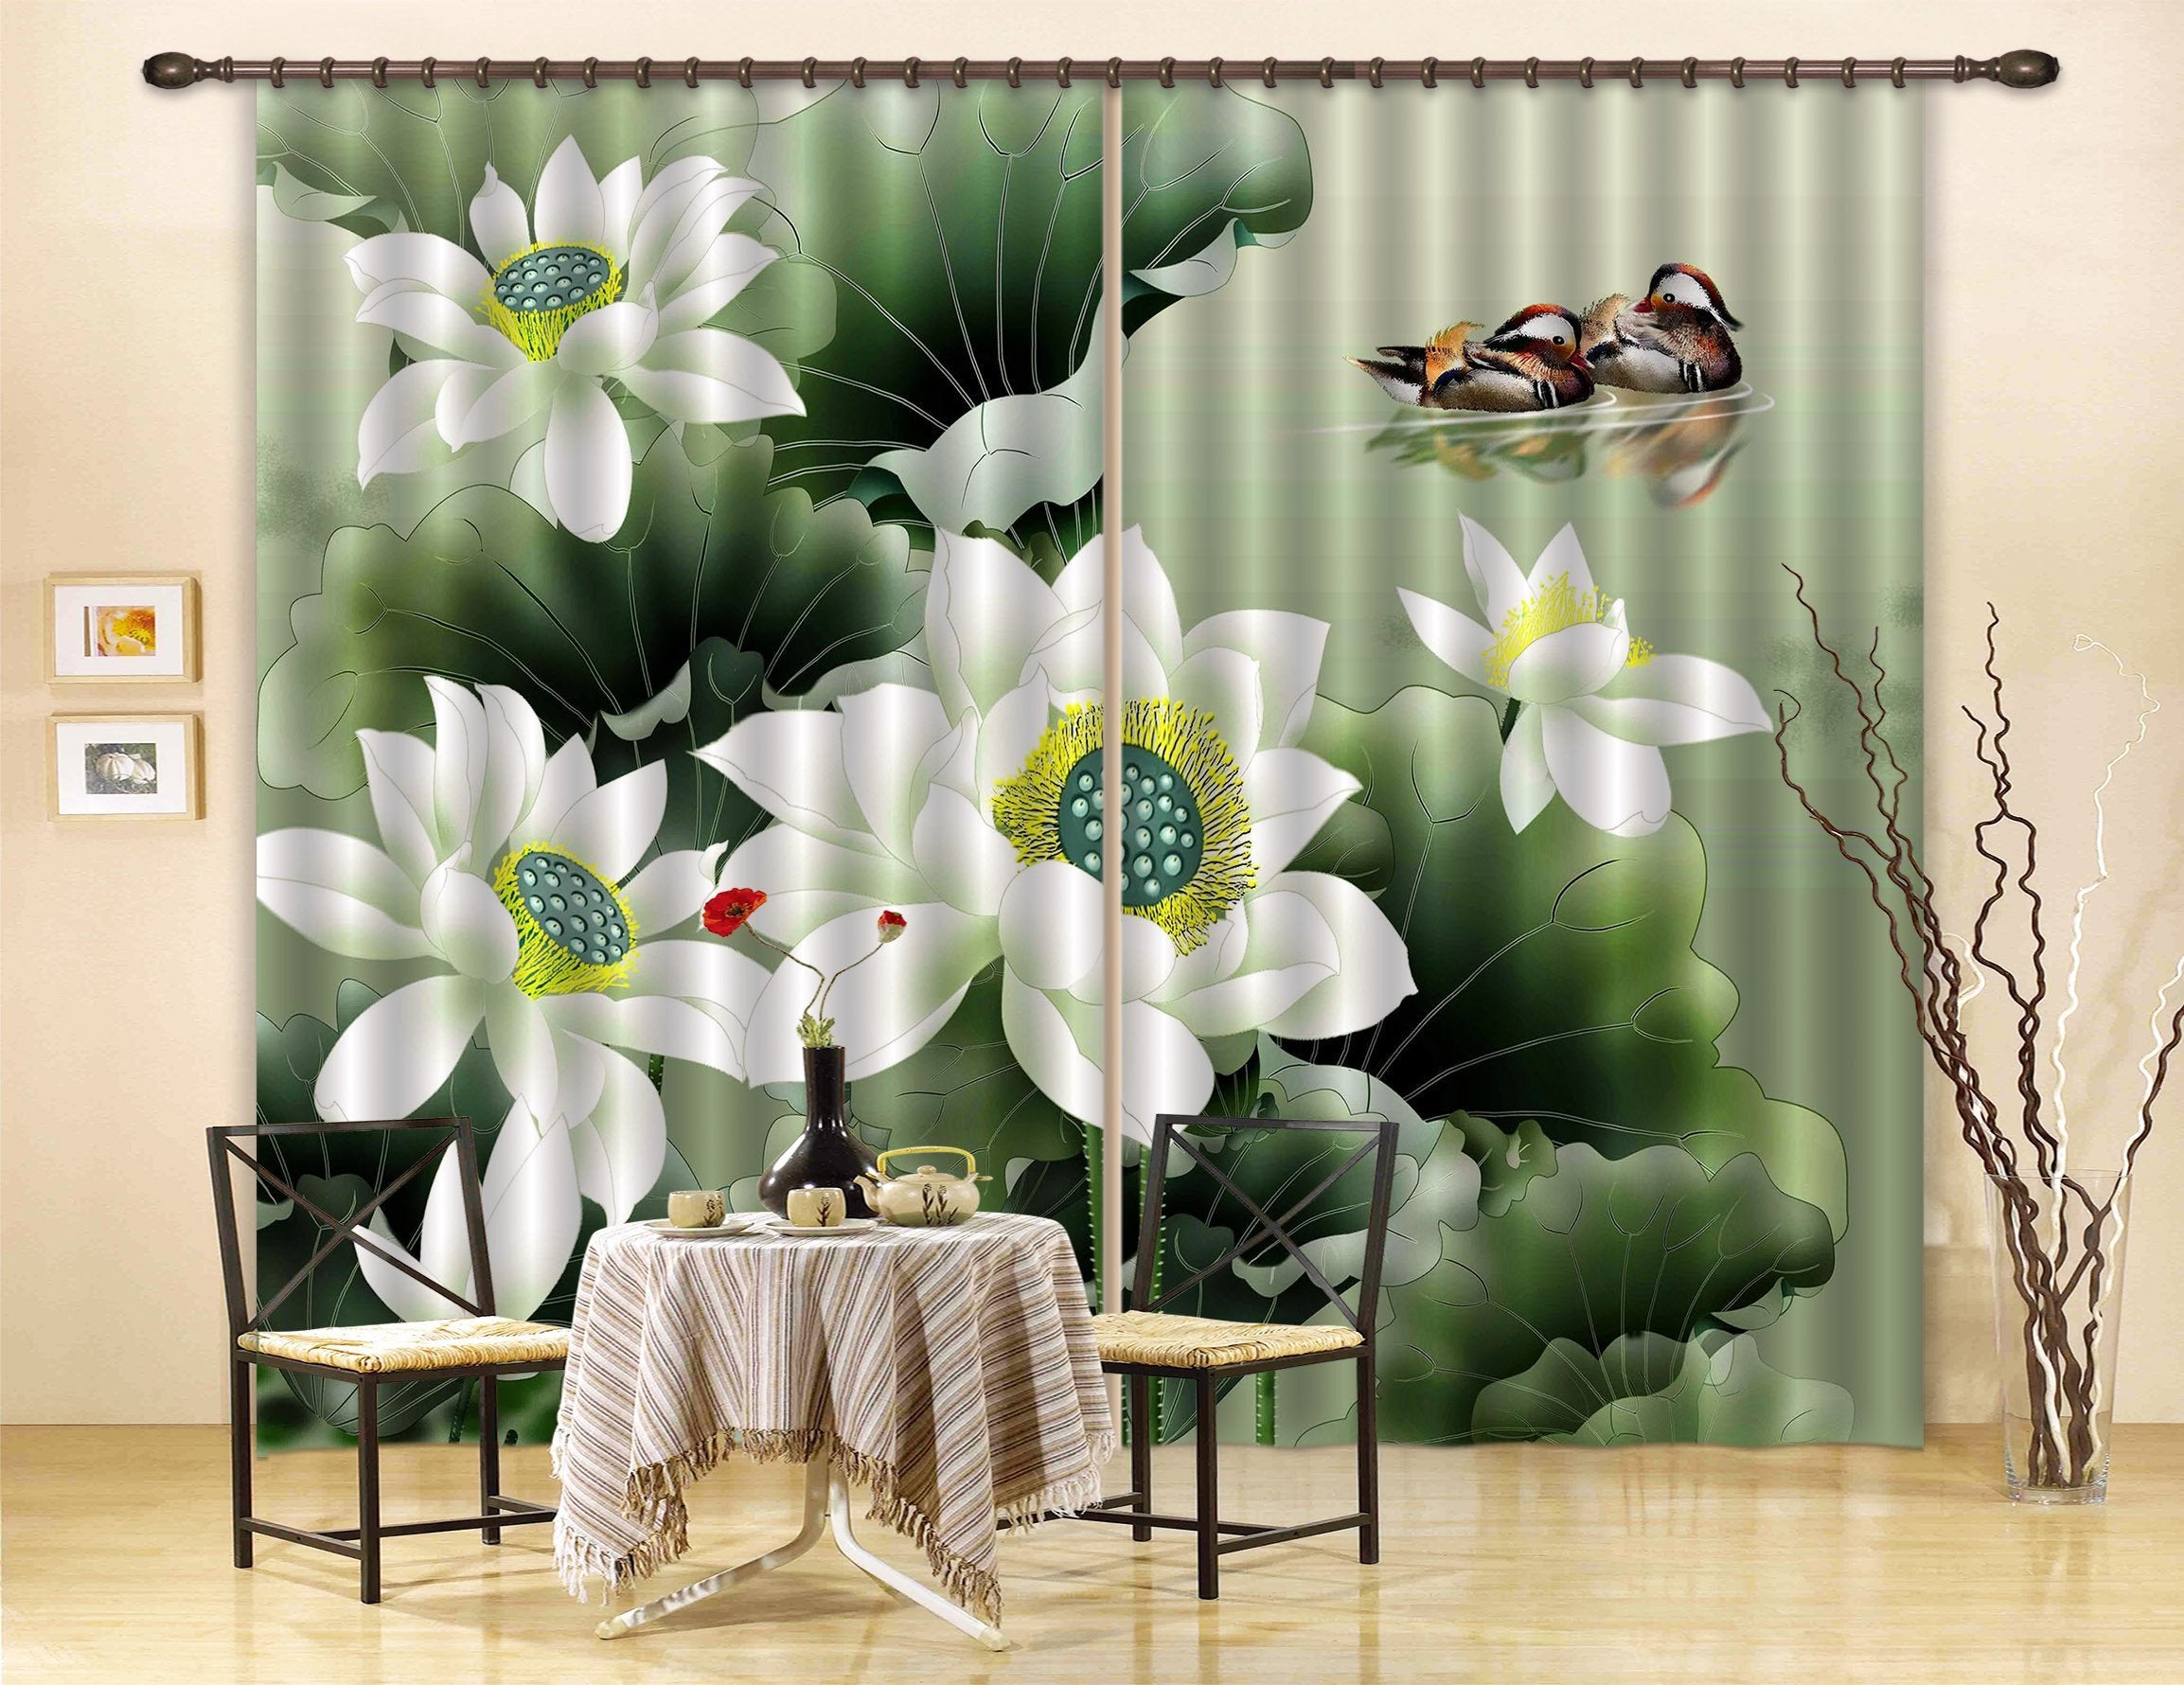 3D Lotus Mandarin Ducks Curtains Drapes Wallpaper AJ Wallpaper 